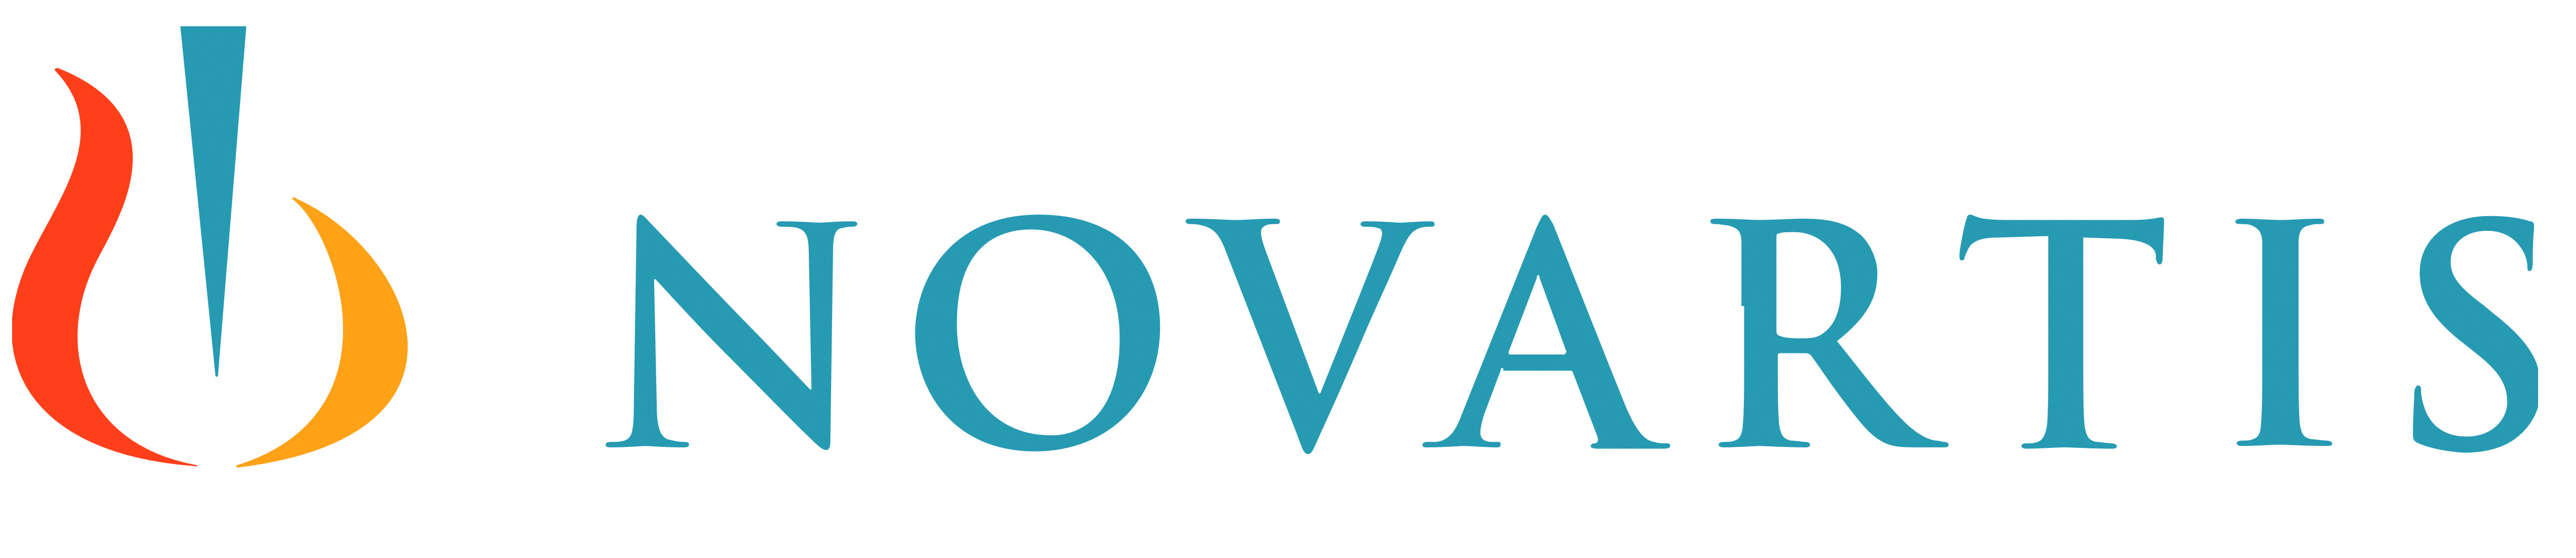 novartis_logo_logotype.jpg